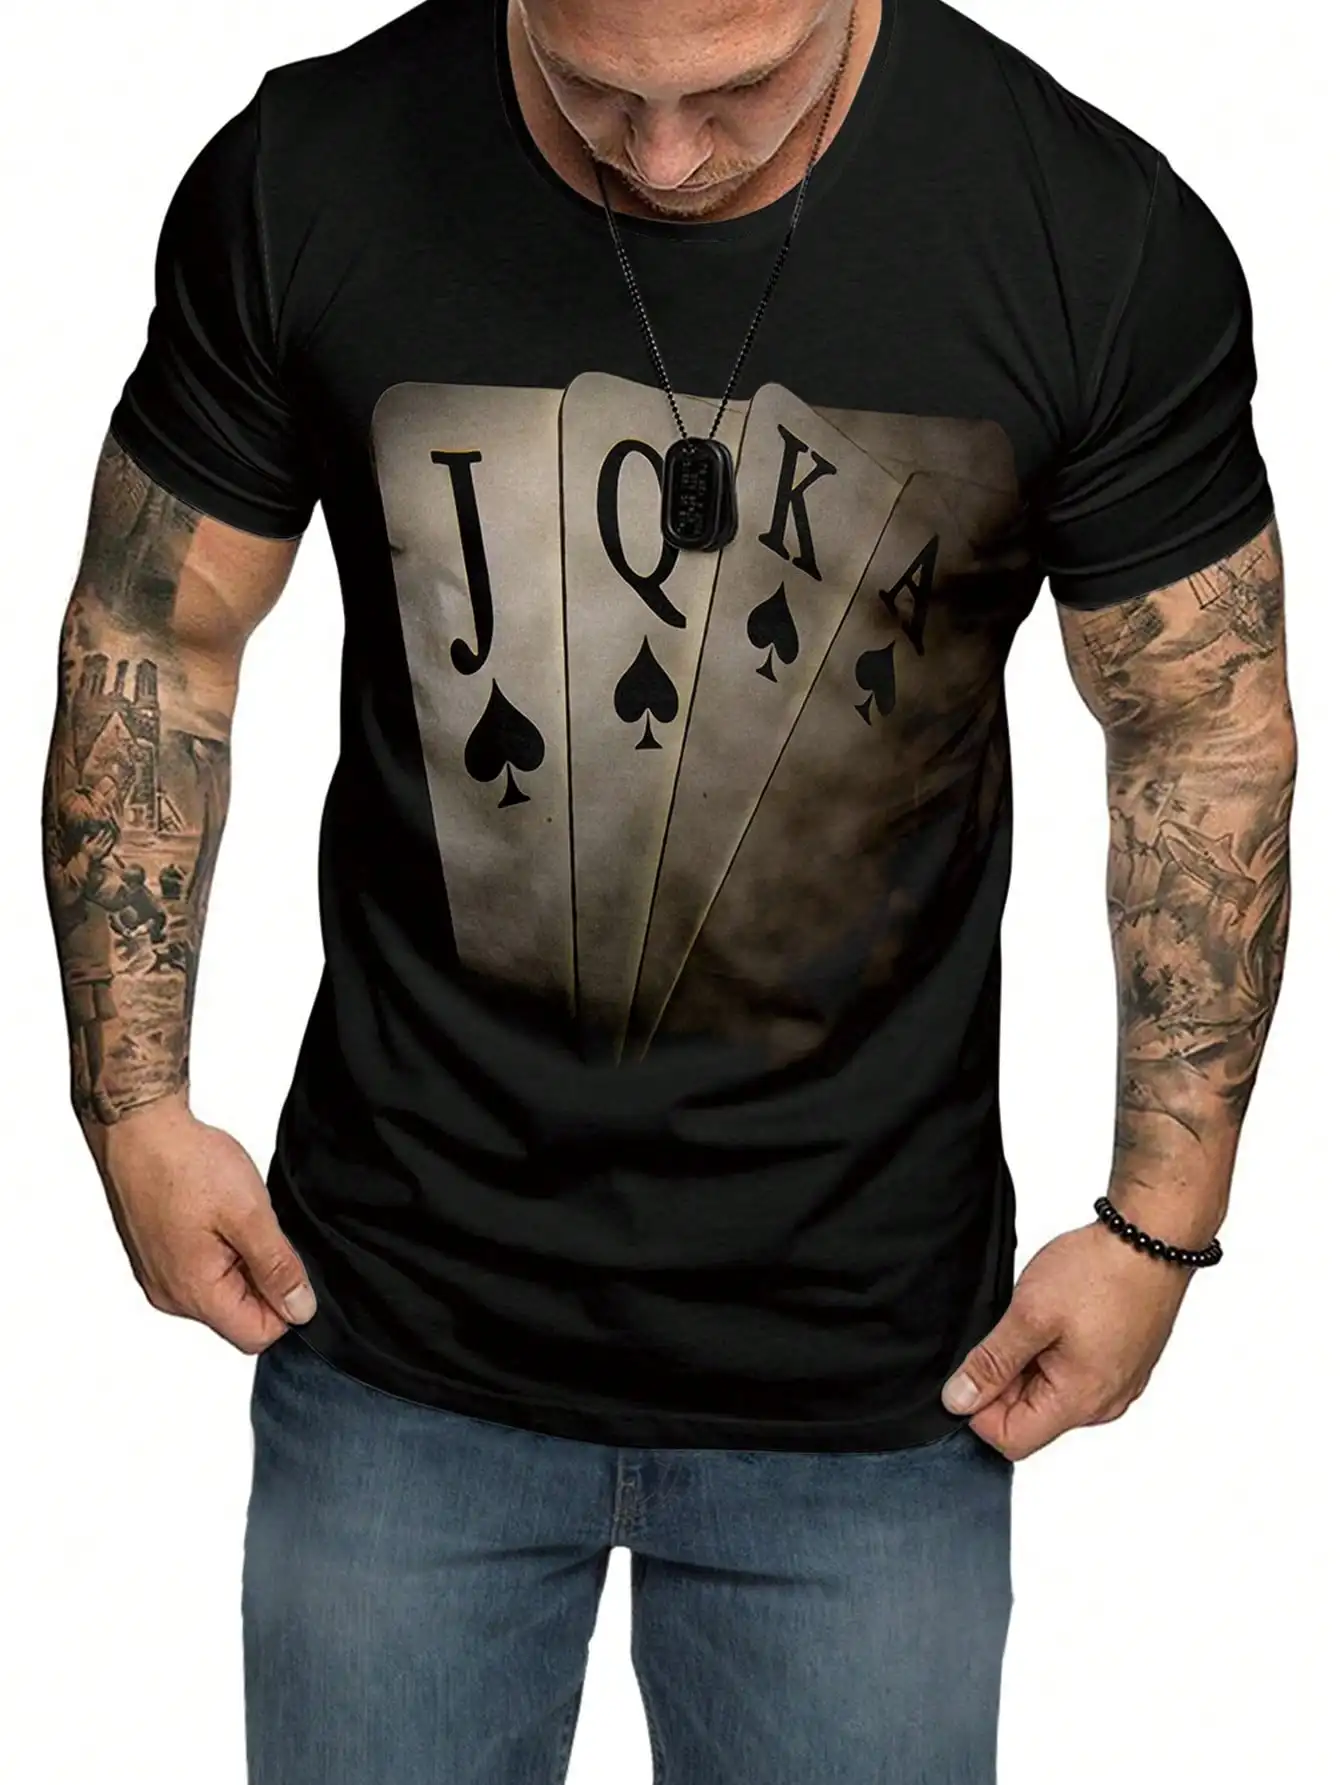 

Summer Fashion Men T-shirt Poker JQK 3d T-Shirt Oversized Streetwear Casual Short Sleeve Men's Clothing Party Tops Tees